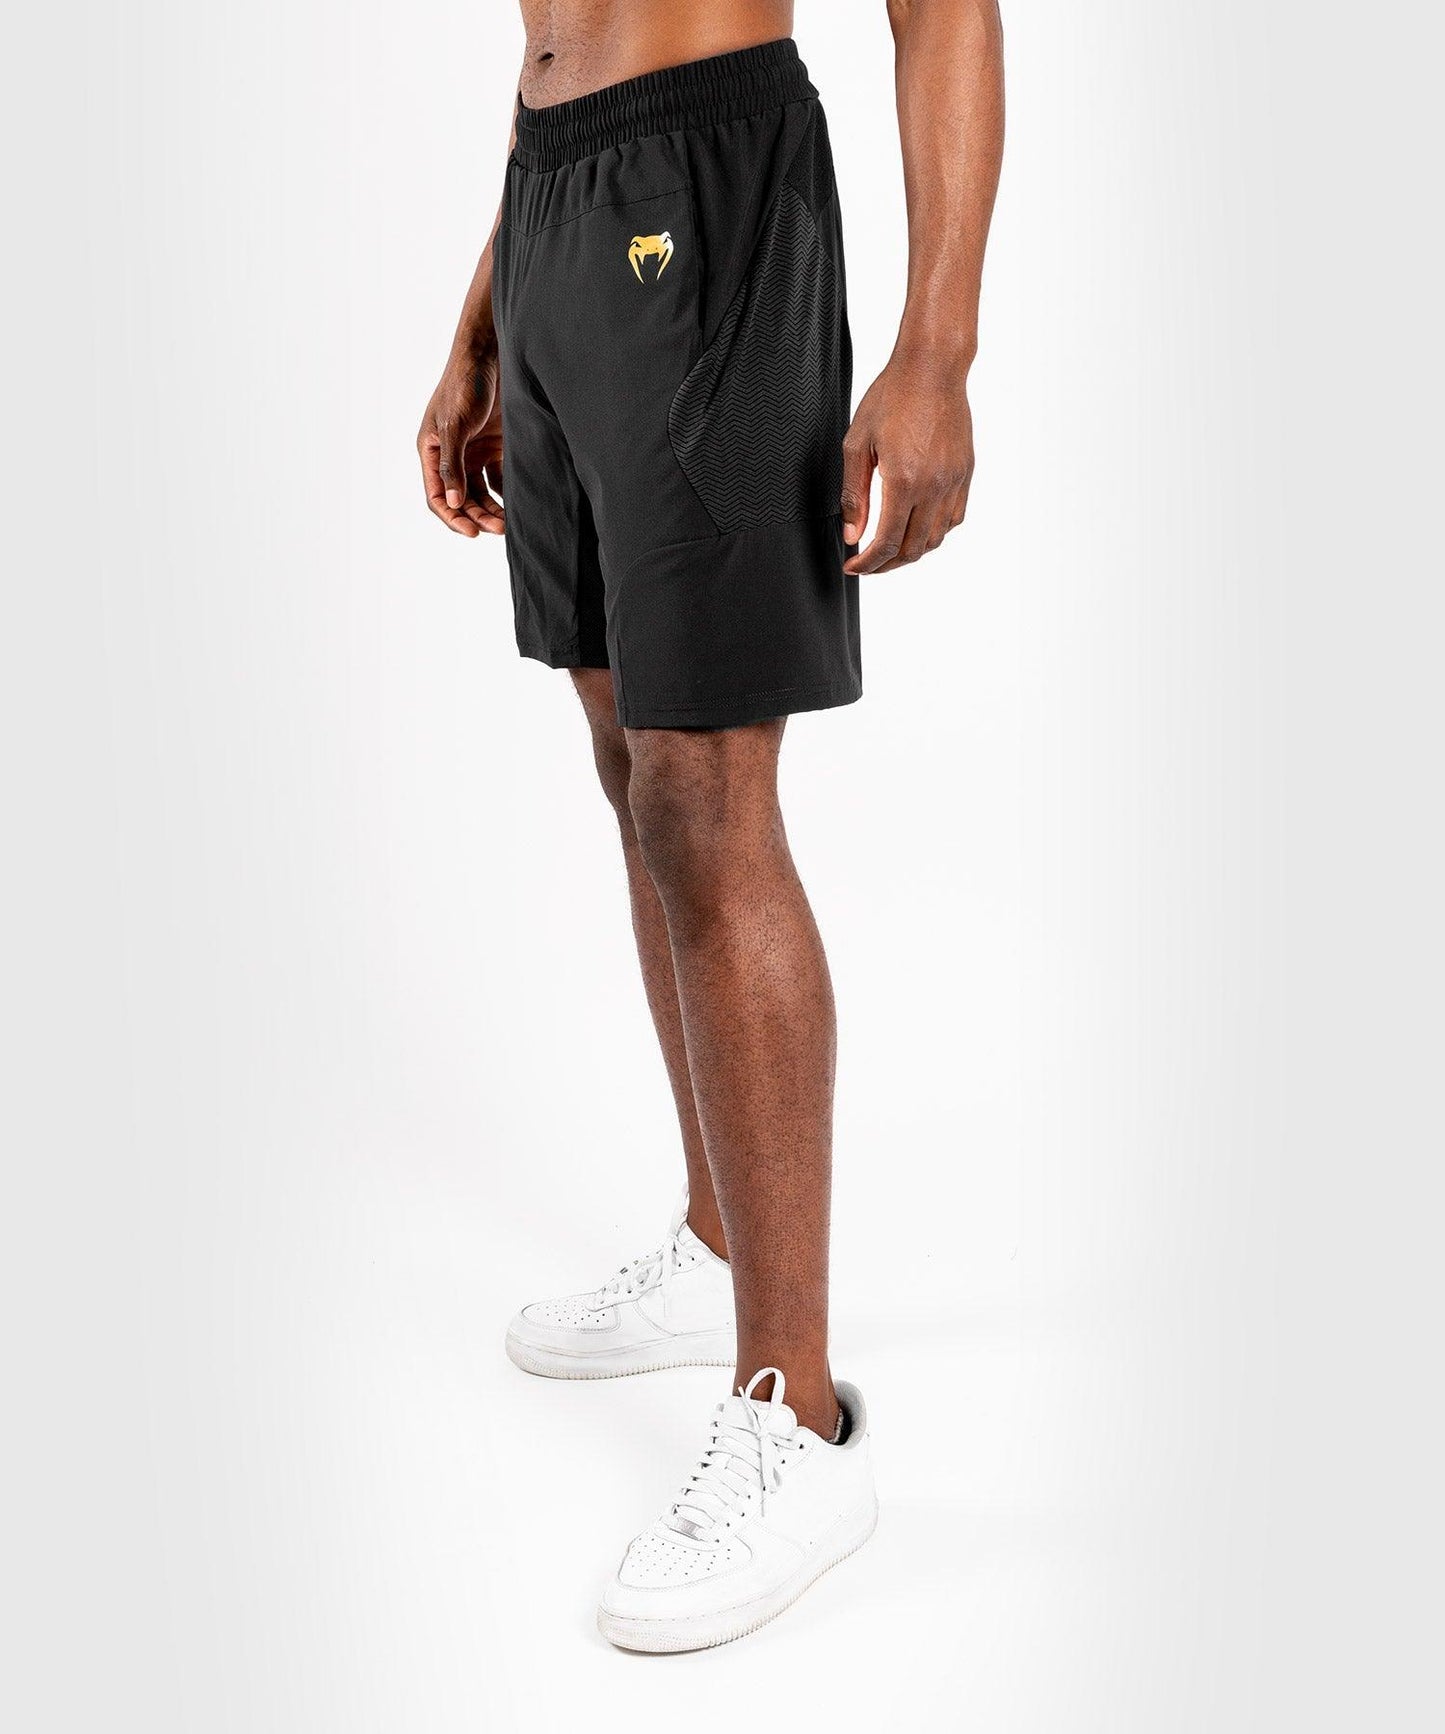 Venum G-Fit Training Shorts - Black/Gold Picture 3